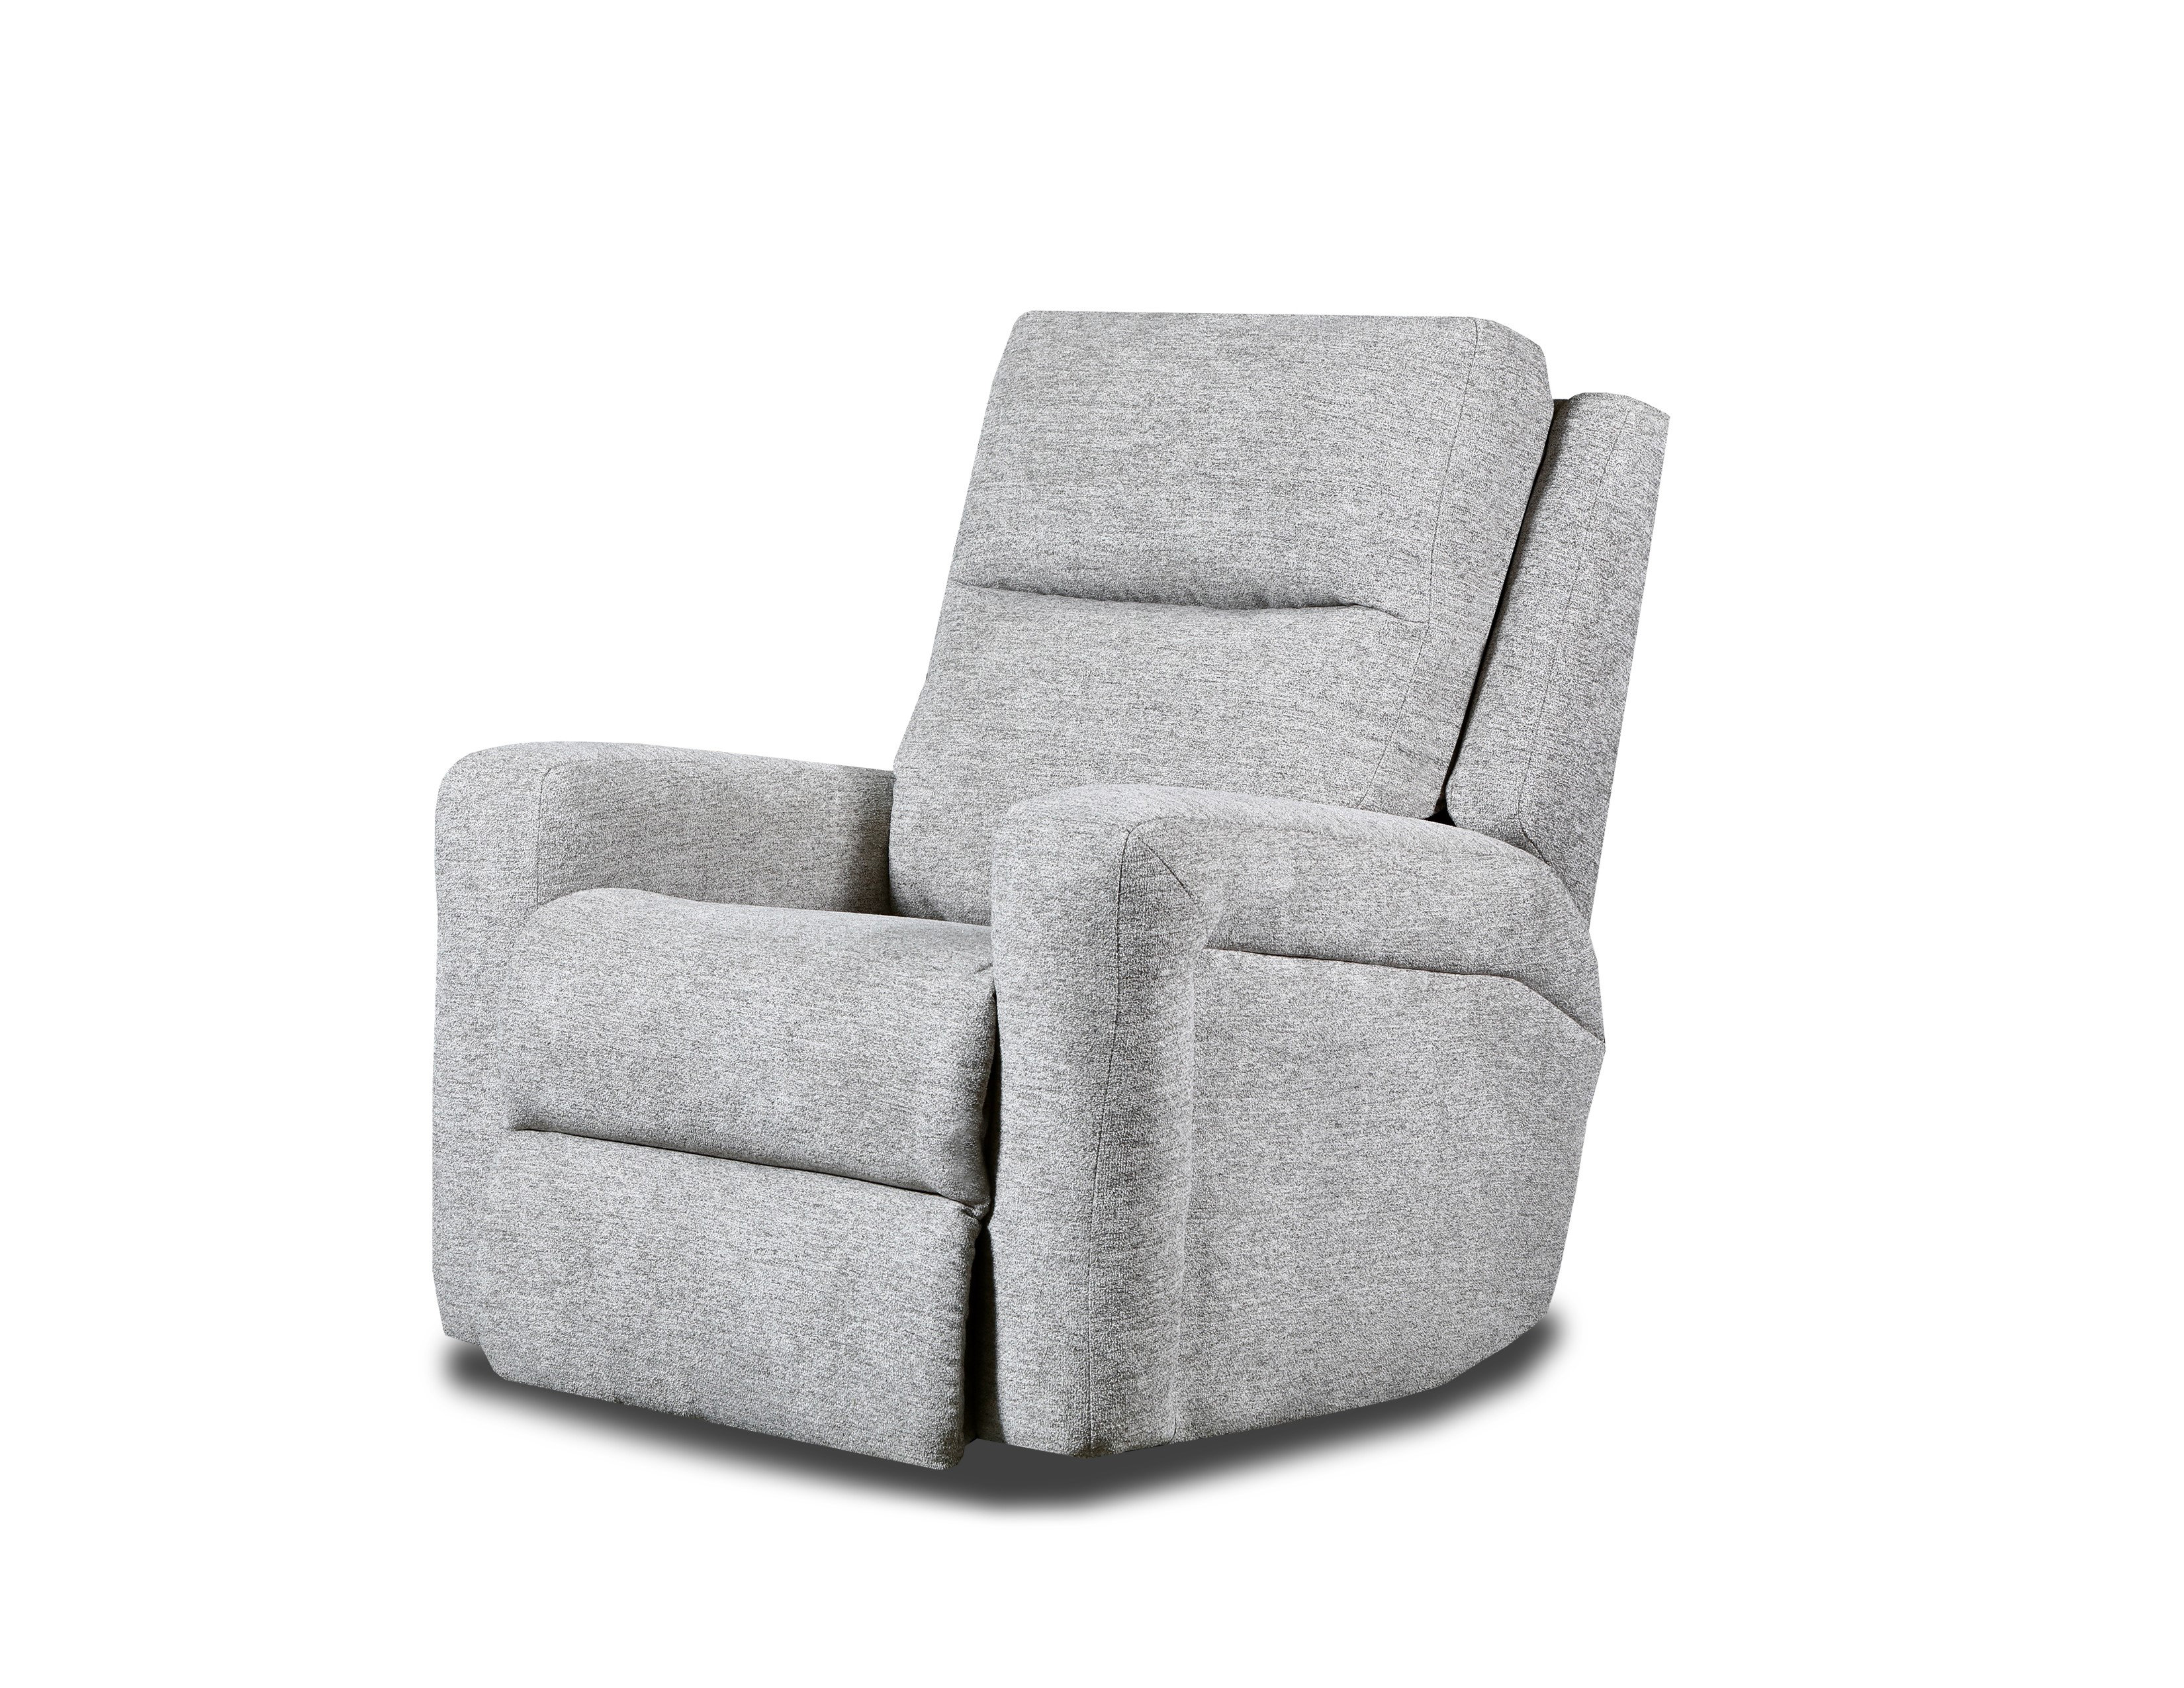 Multi-Purpose Recliner Cushion – 100% Polyester Velour Recliner